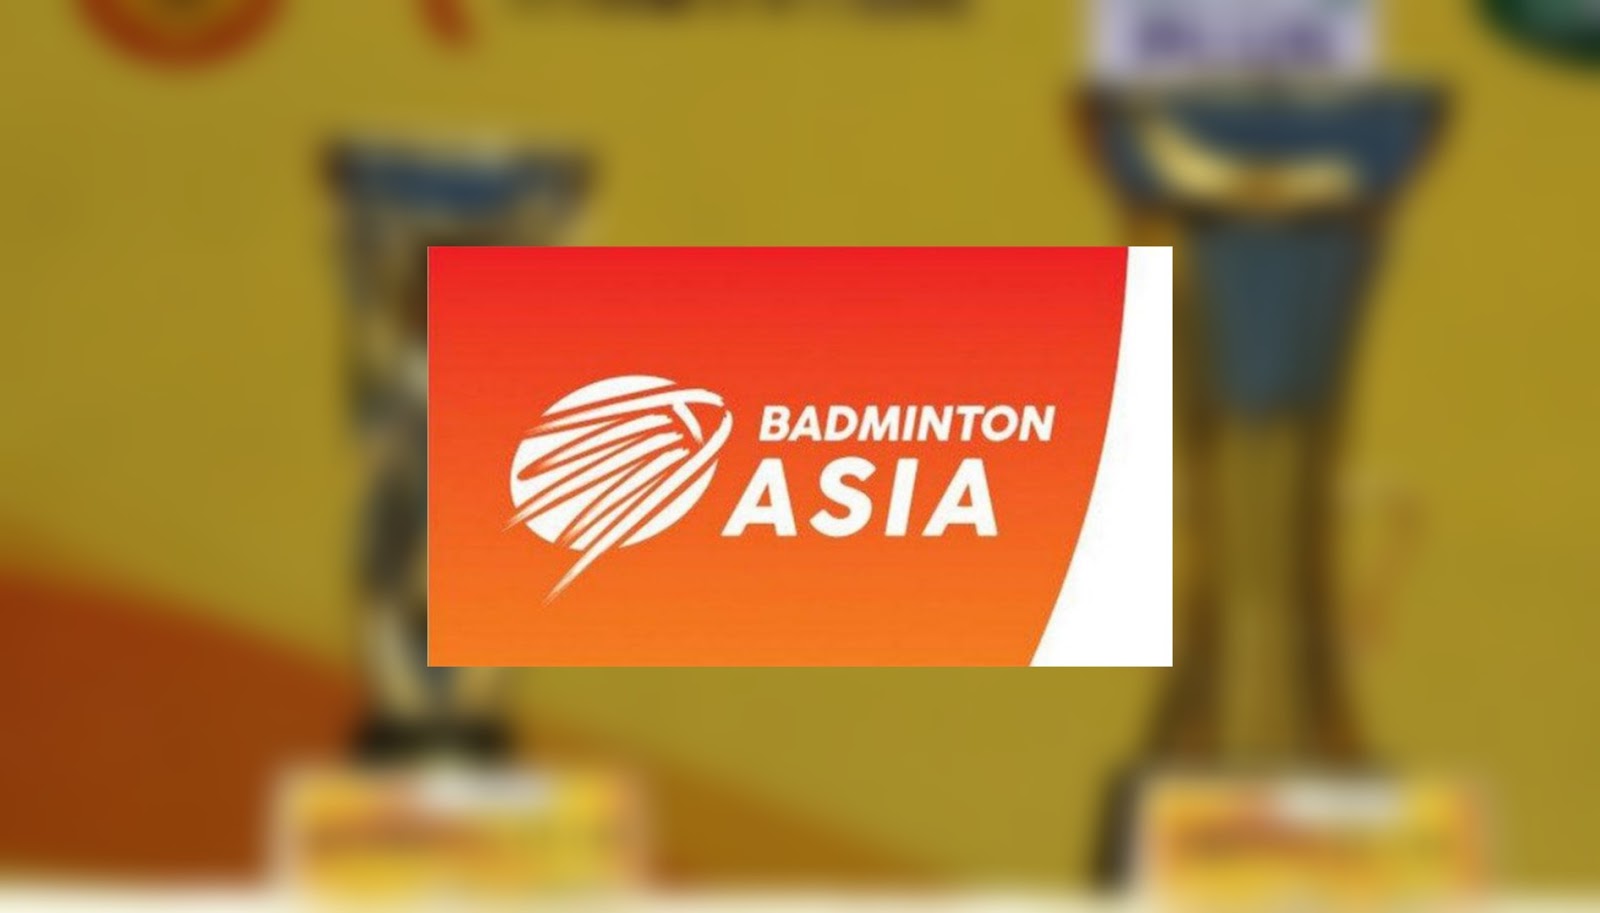 Jadual Kejohanan Badminton Berpasukan Asia 2020 (Keputusan)